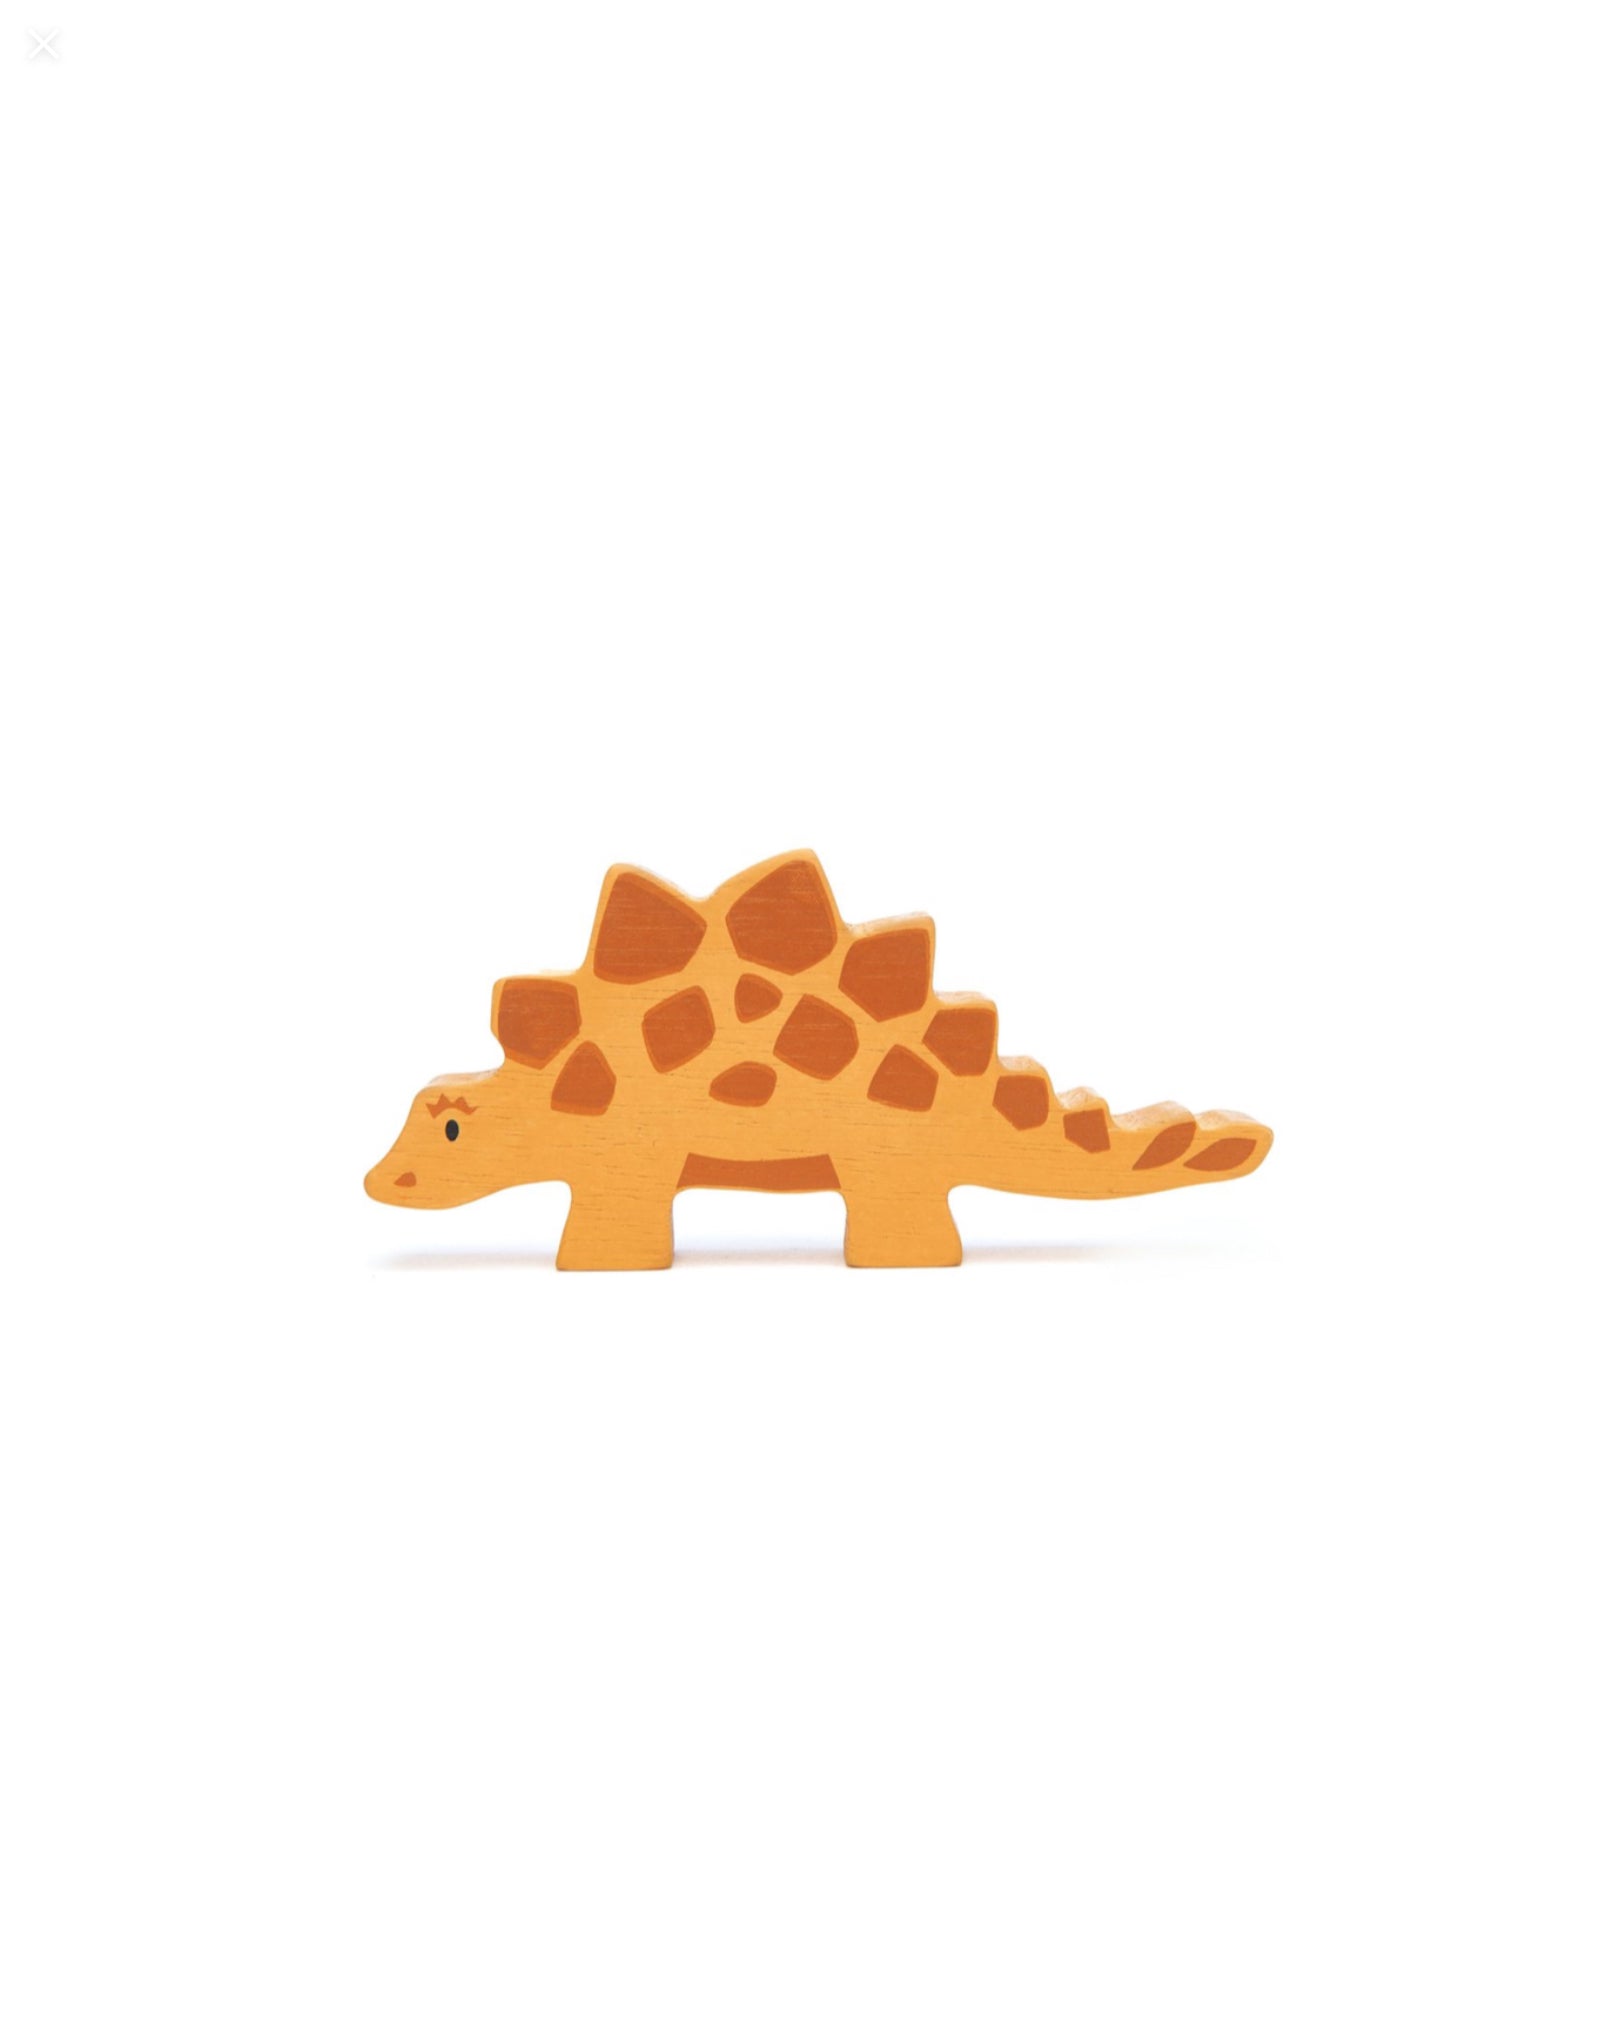 Tender Leaf Toys Stegosaurus  Wooden Dinosaur Toy